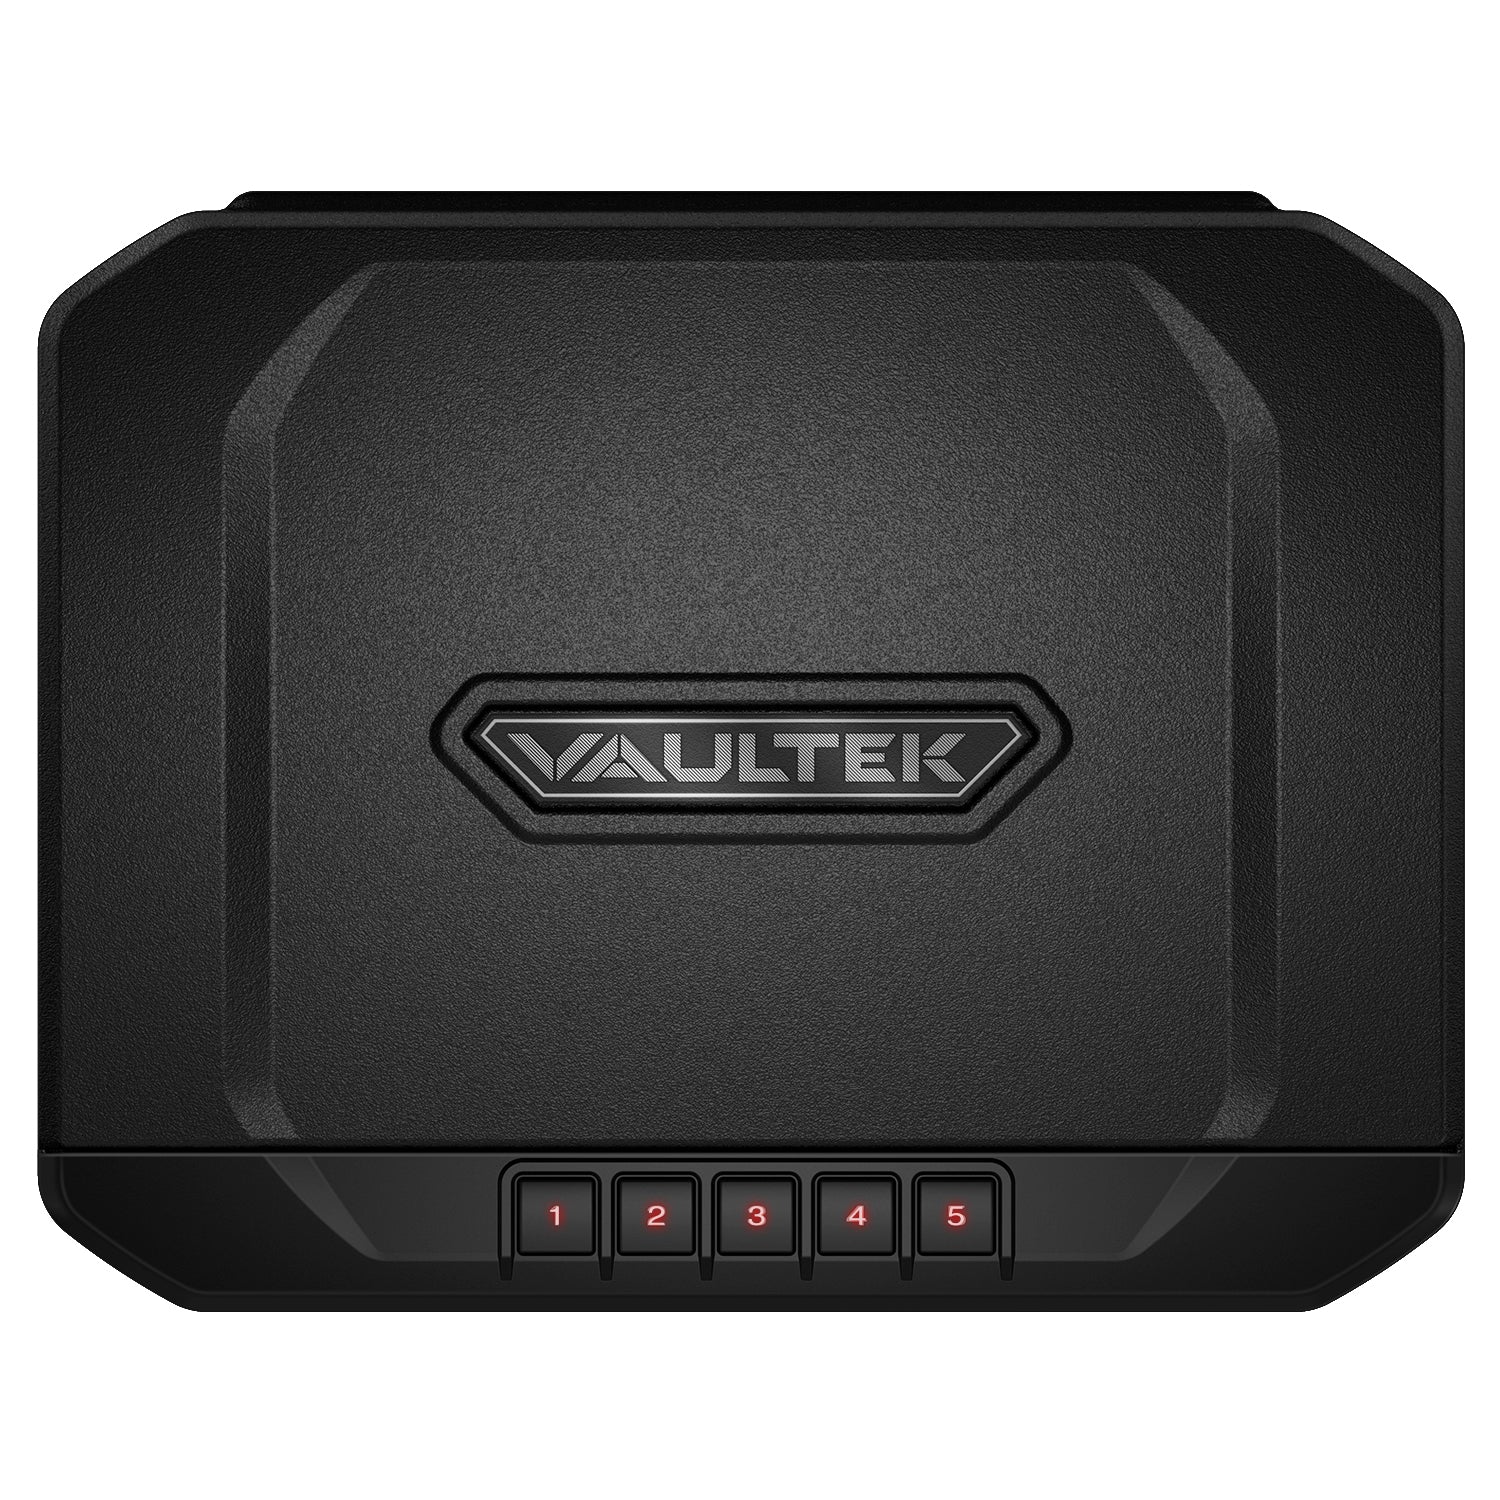 Vaultek - 20 series vs20 compact bluetooth and keypad gun safe - convert black - MODLOCK